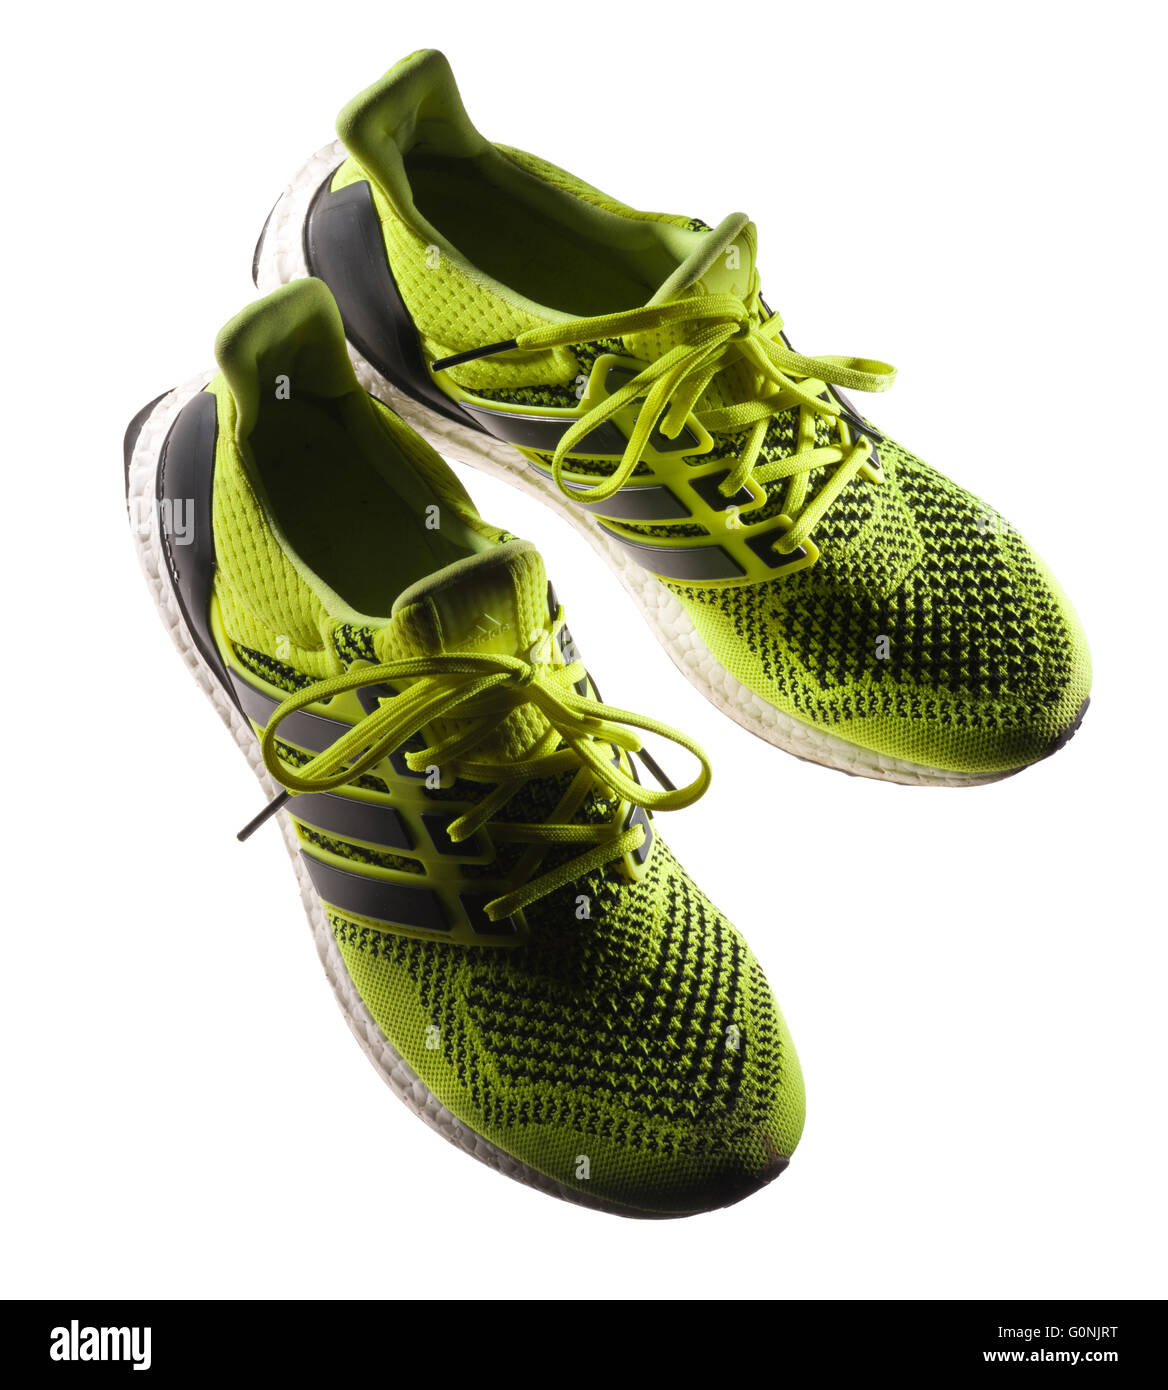 Adidas Running Shoes Green | englishfor2day.com